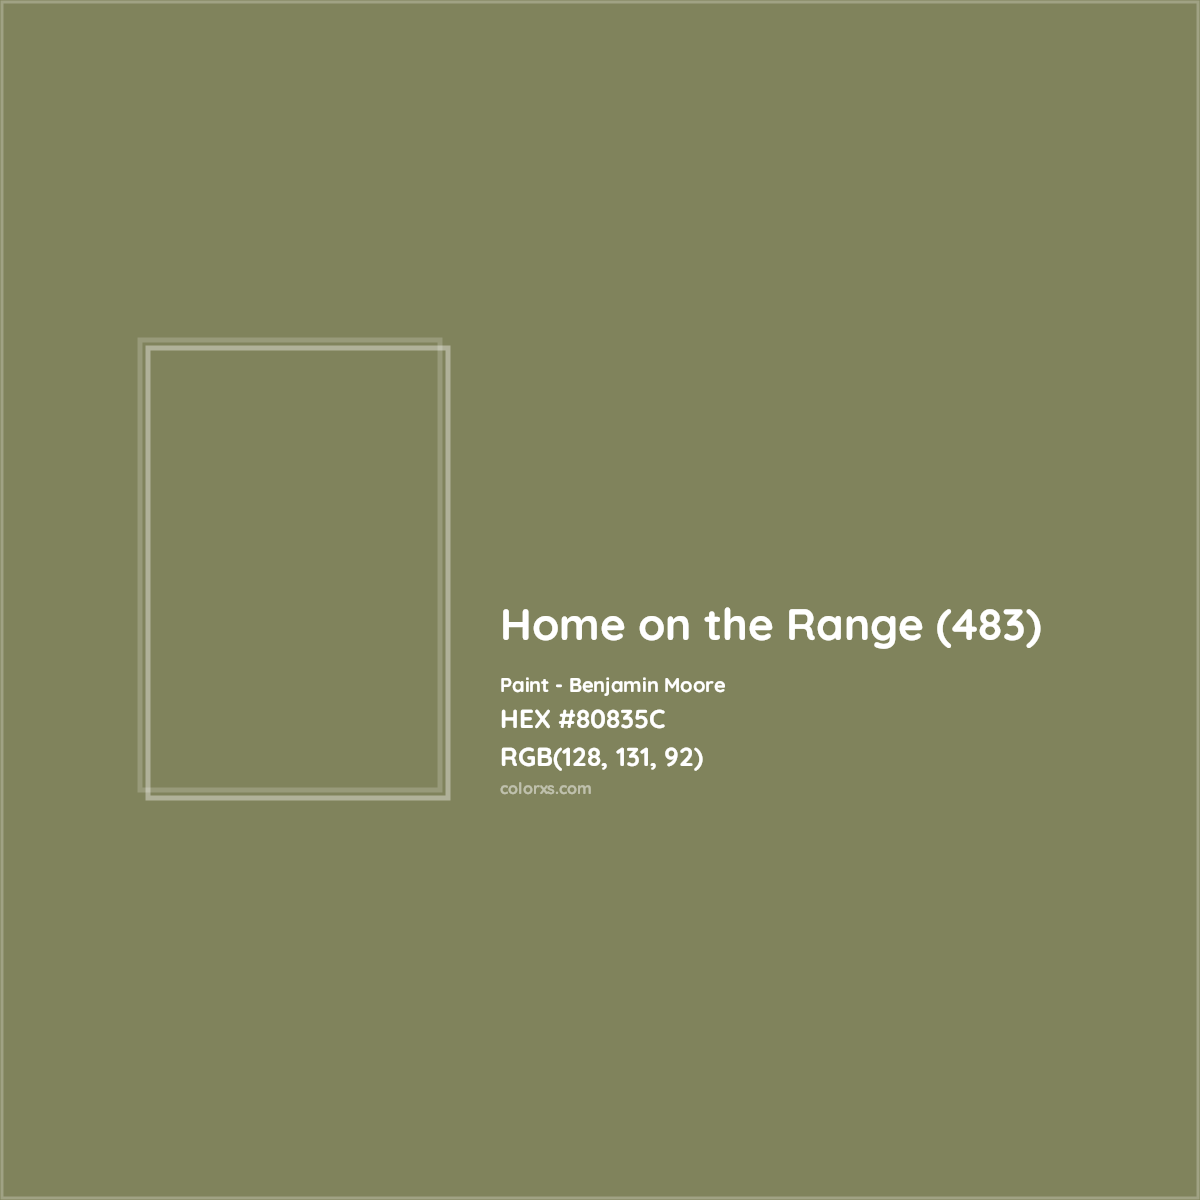 HEX #80835C Home on the Range (483) Paint Benjamin Moore - Color Code